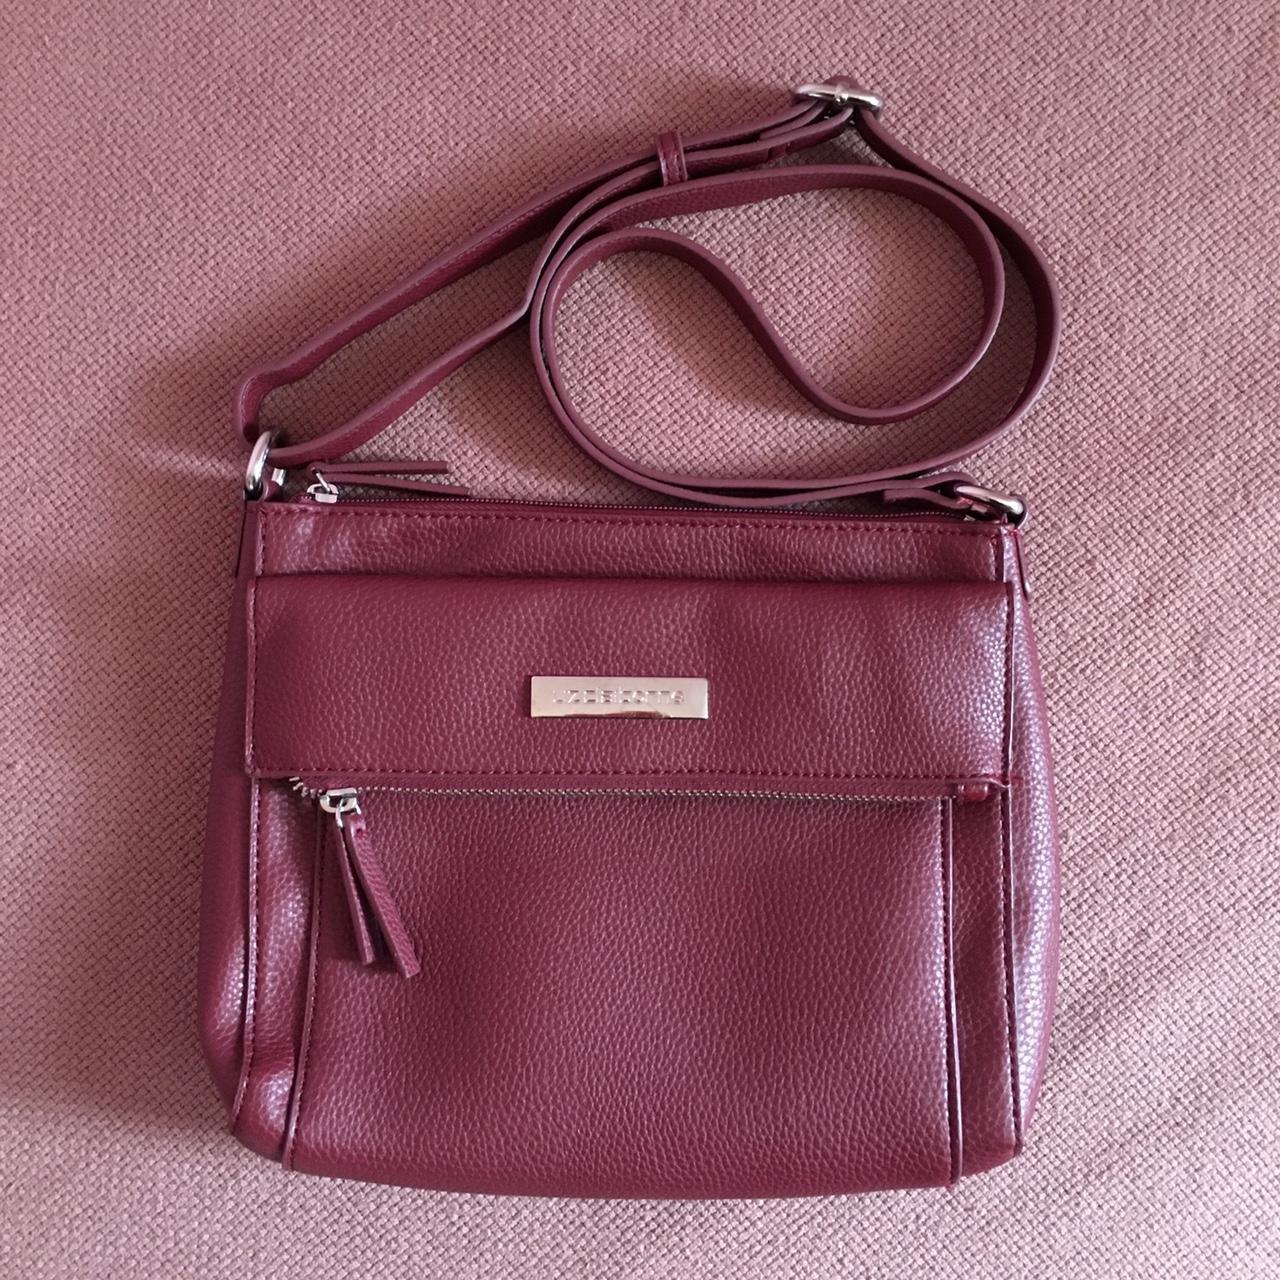 Liz Claiborne, Red Leather, Crossbody, Purse, Handbag with 22 Inch Drop  Strap | eBay